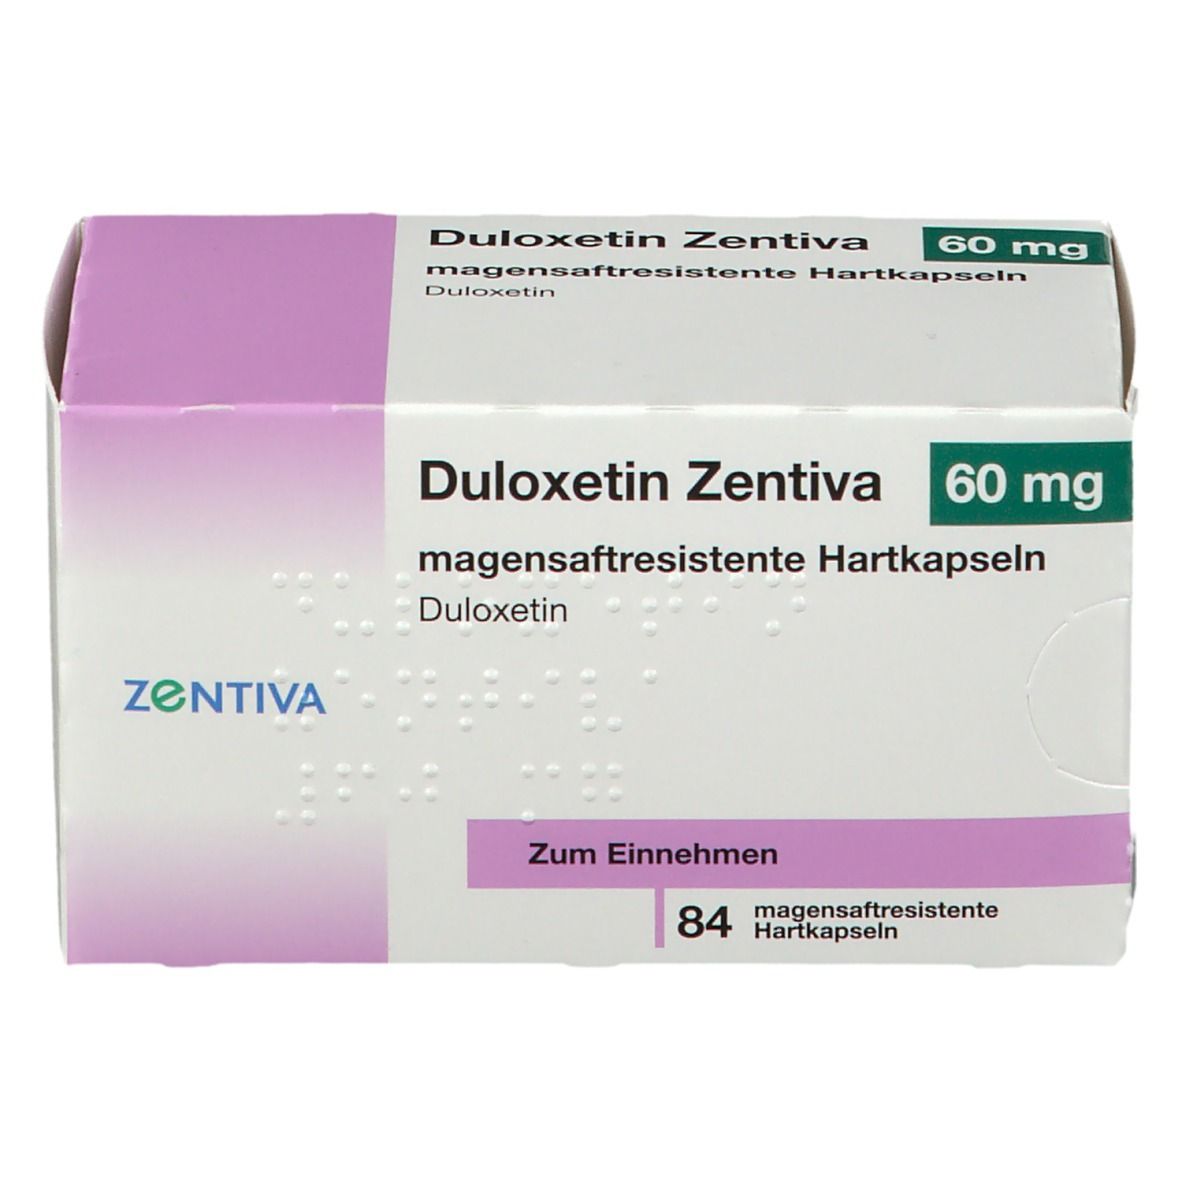 Duloxetin Zentiva® 60 mg